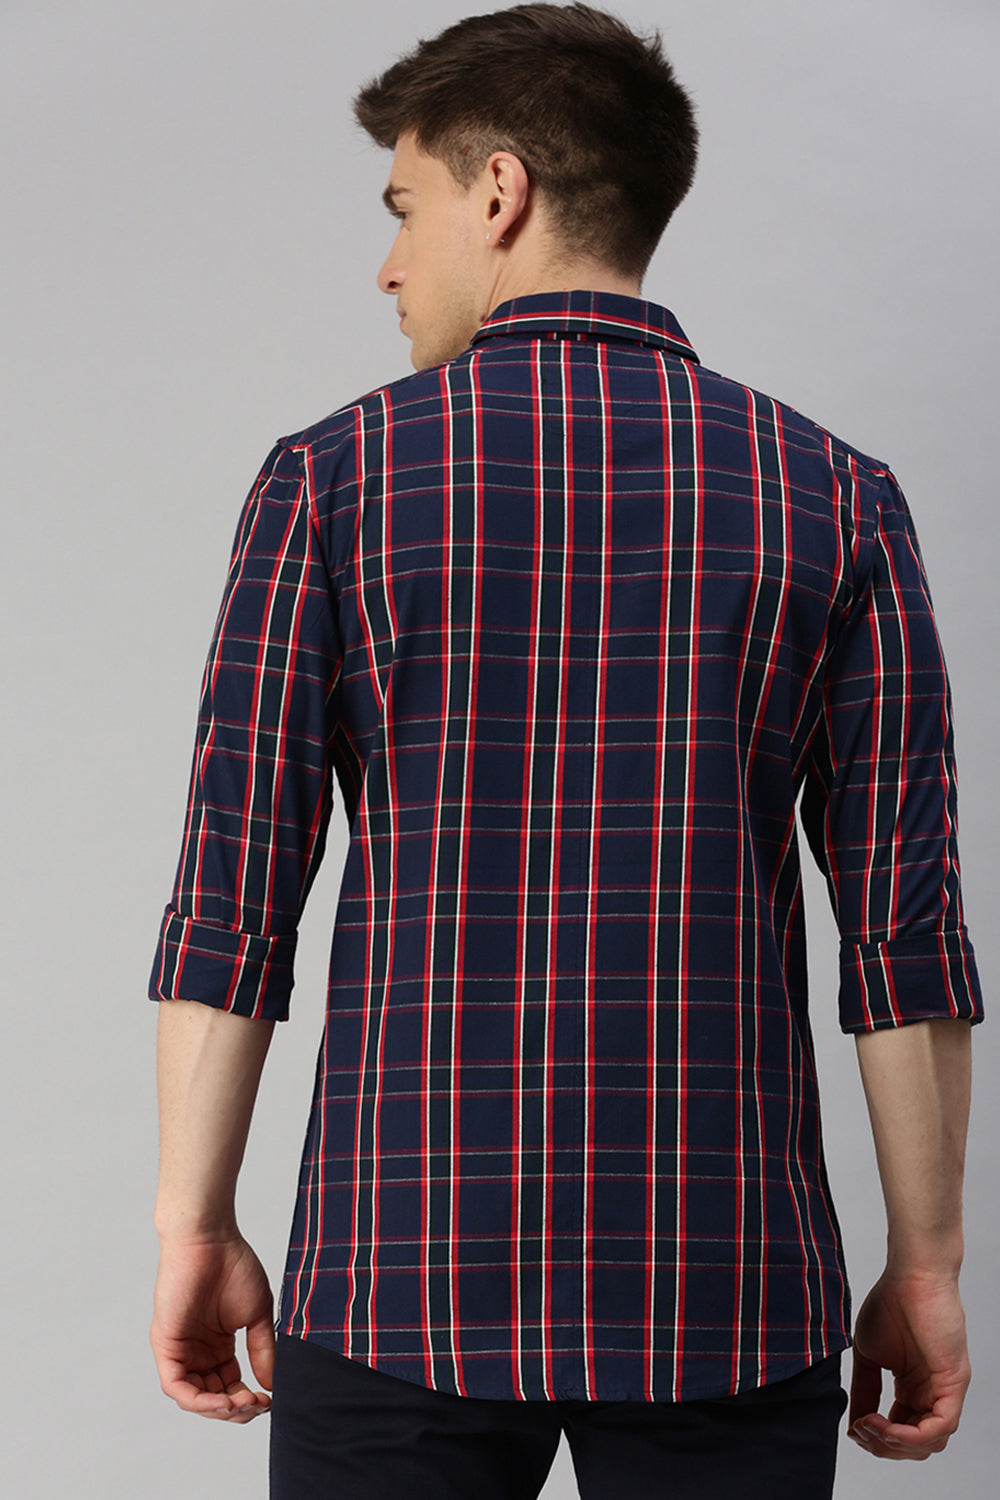 CP BRO Men's Cotton Full Sleeve Checked Slim Fit Collar Neck Multicolor Woven Shirt | Sbo1-50 A